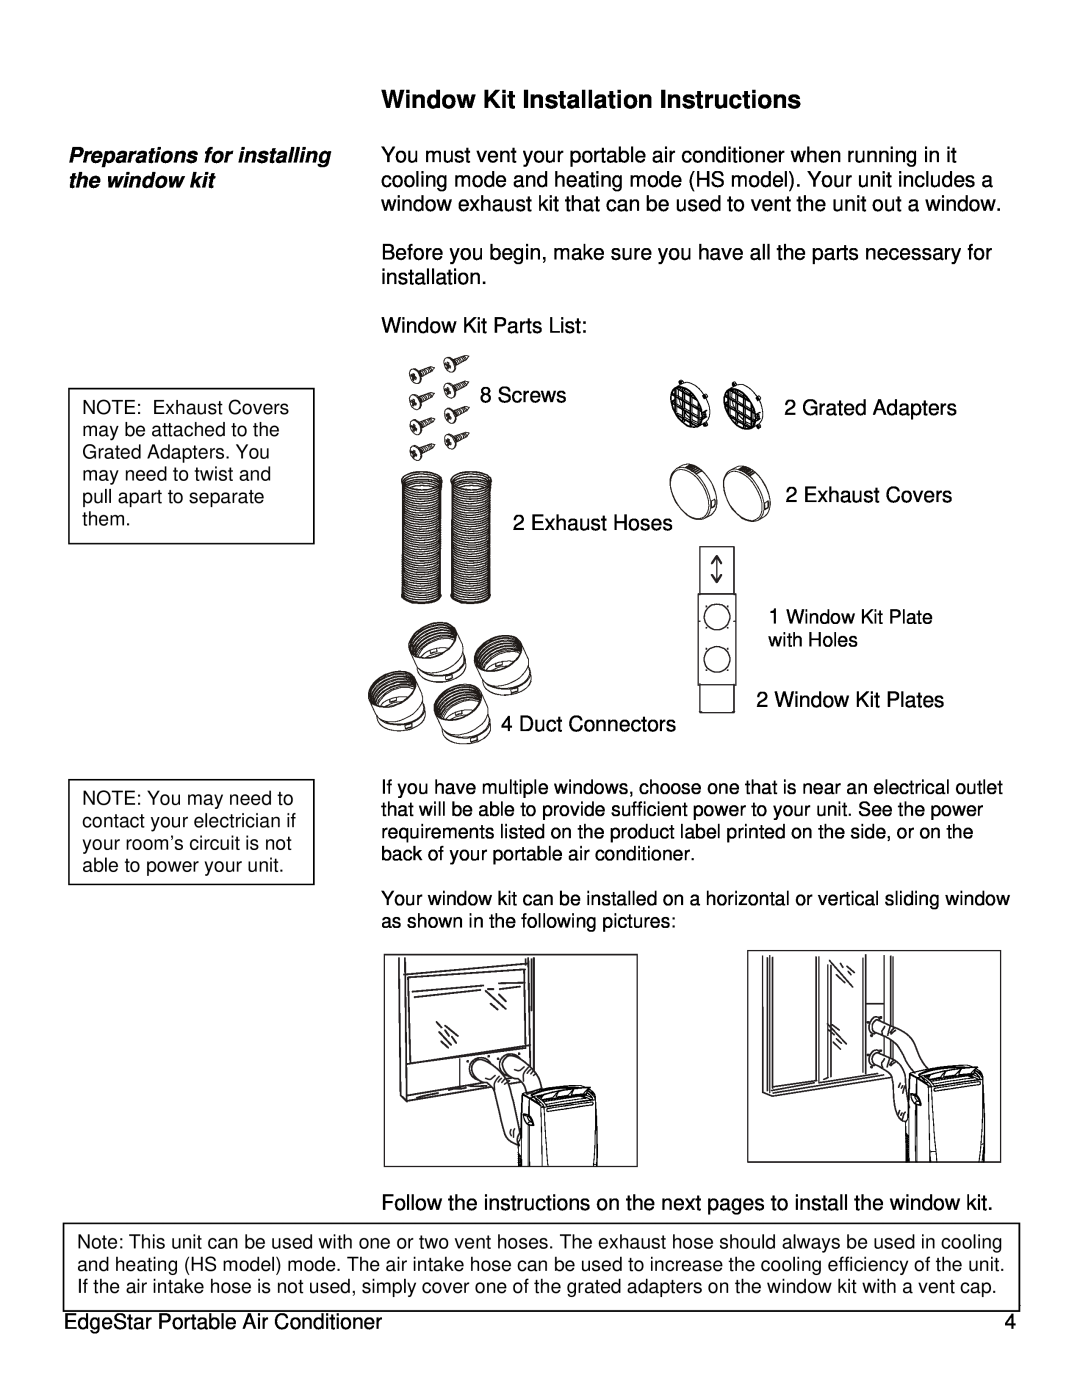 EdgeStar AP14000W owner manual Window Kit Installation Instructions, Preparations for installing the window kit 